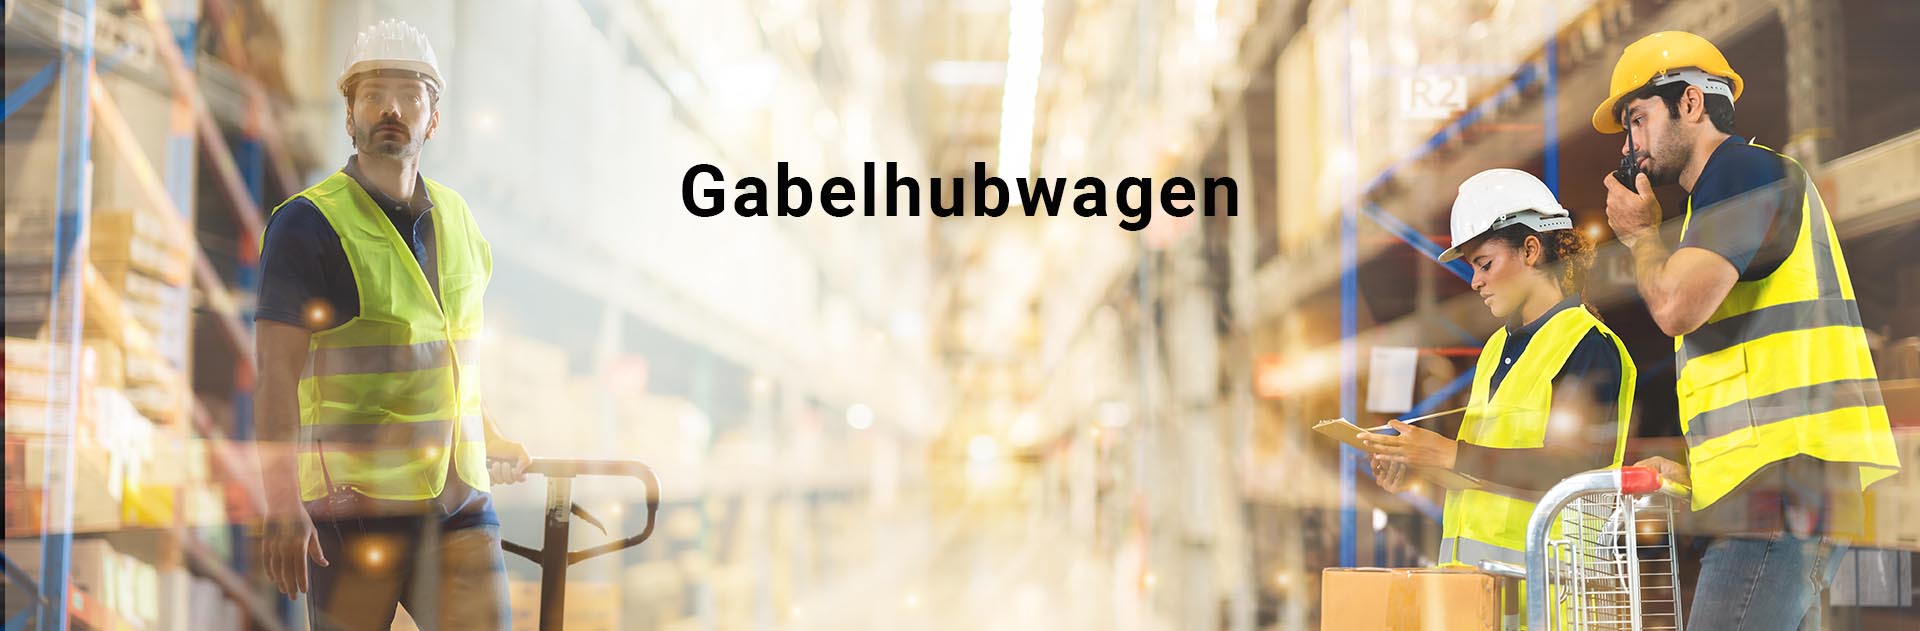 Gabelhubwagen_Header_AdobeStock_491433956